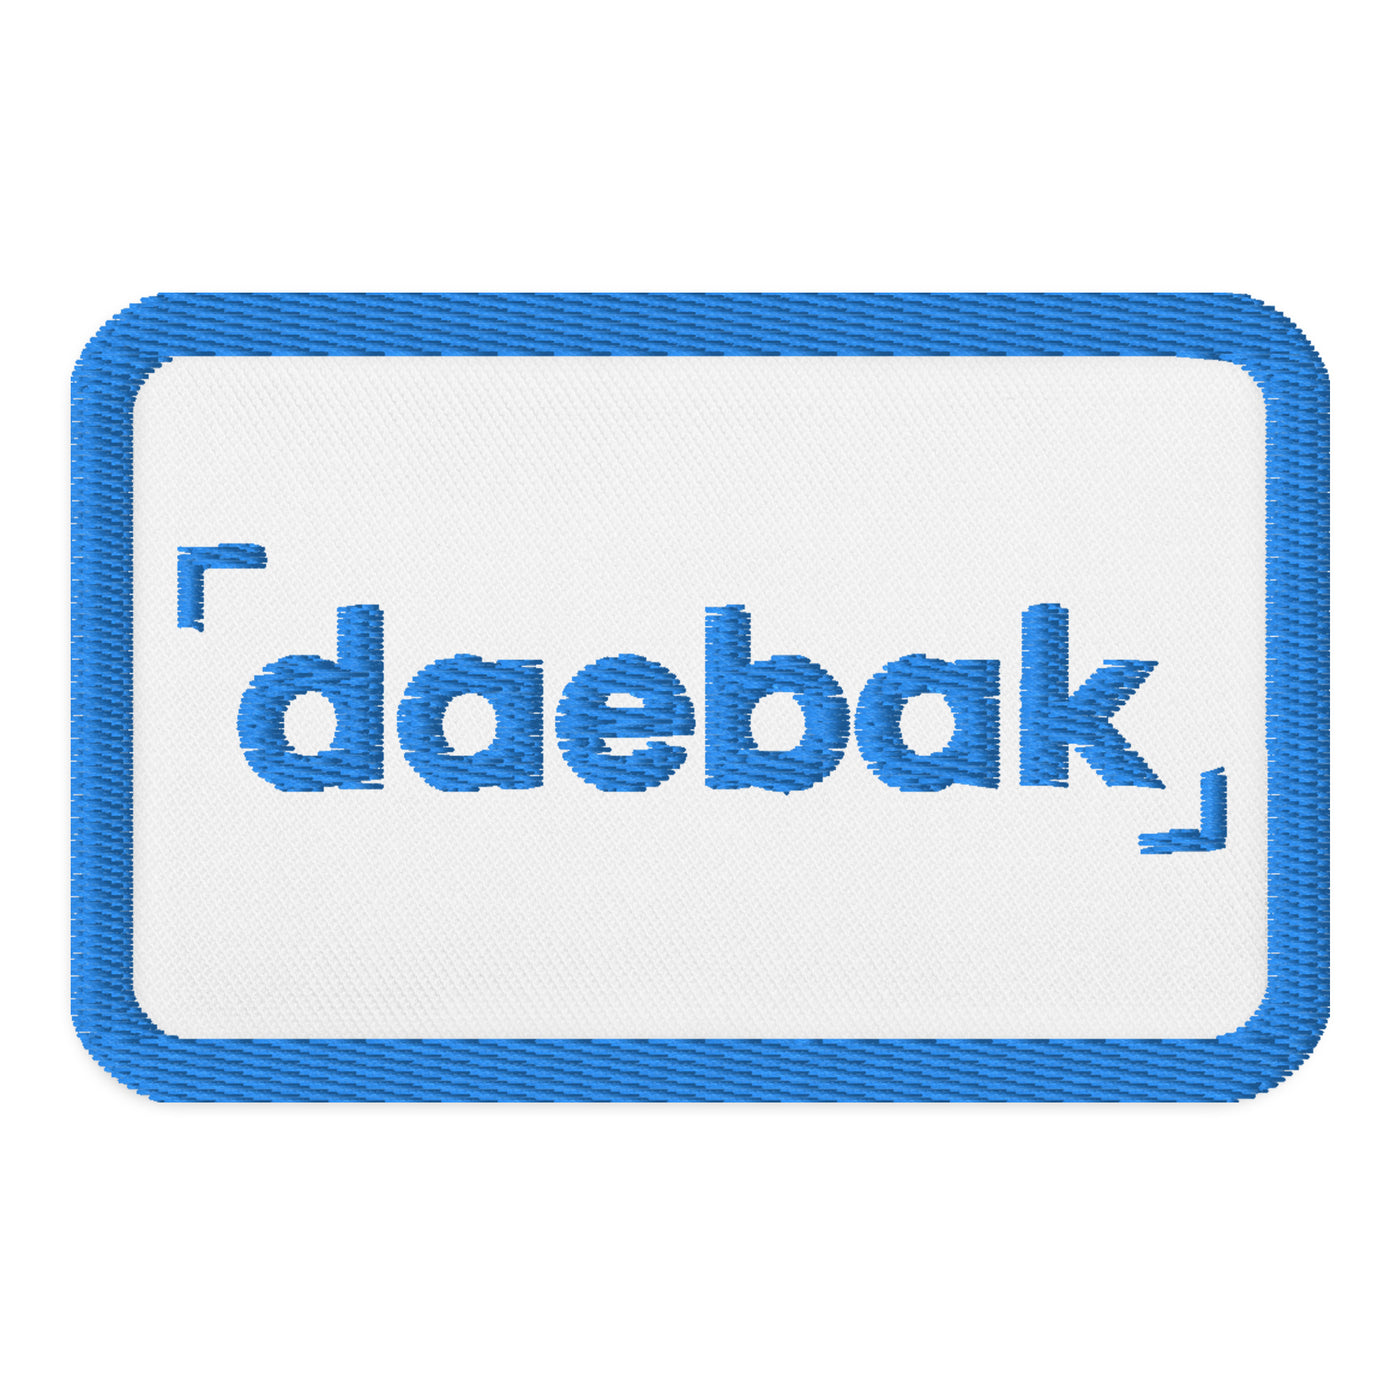 Daebak Embroidered Patch - Blue Logo